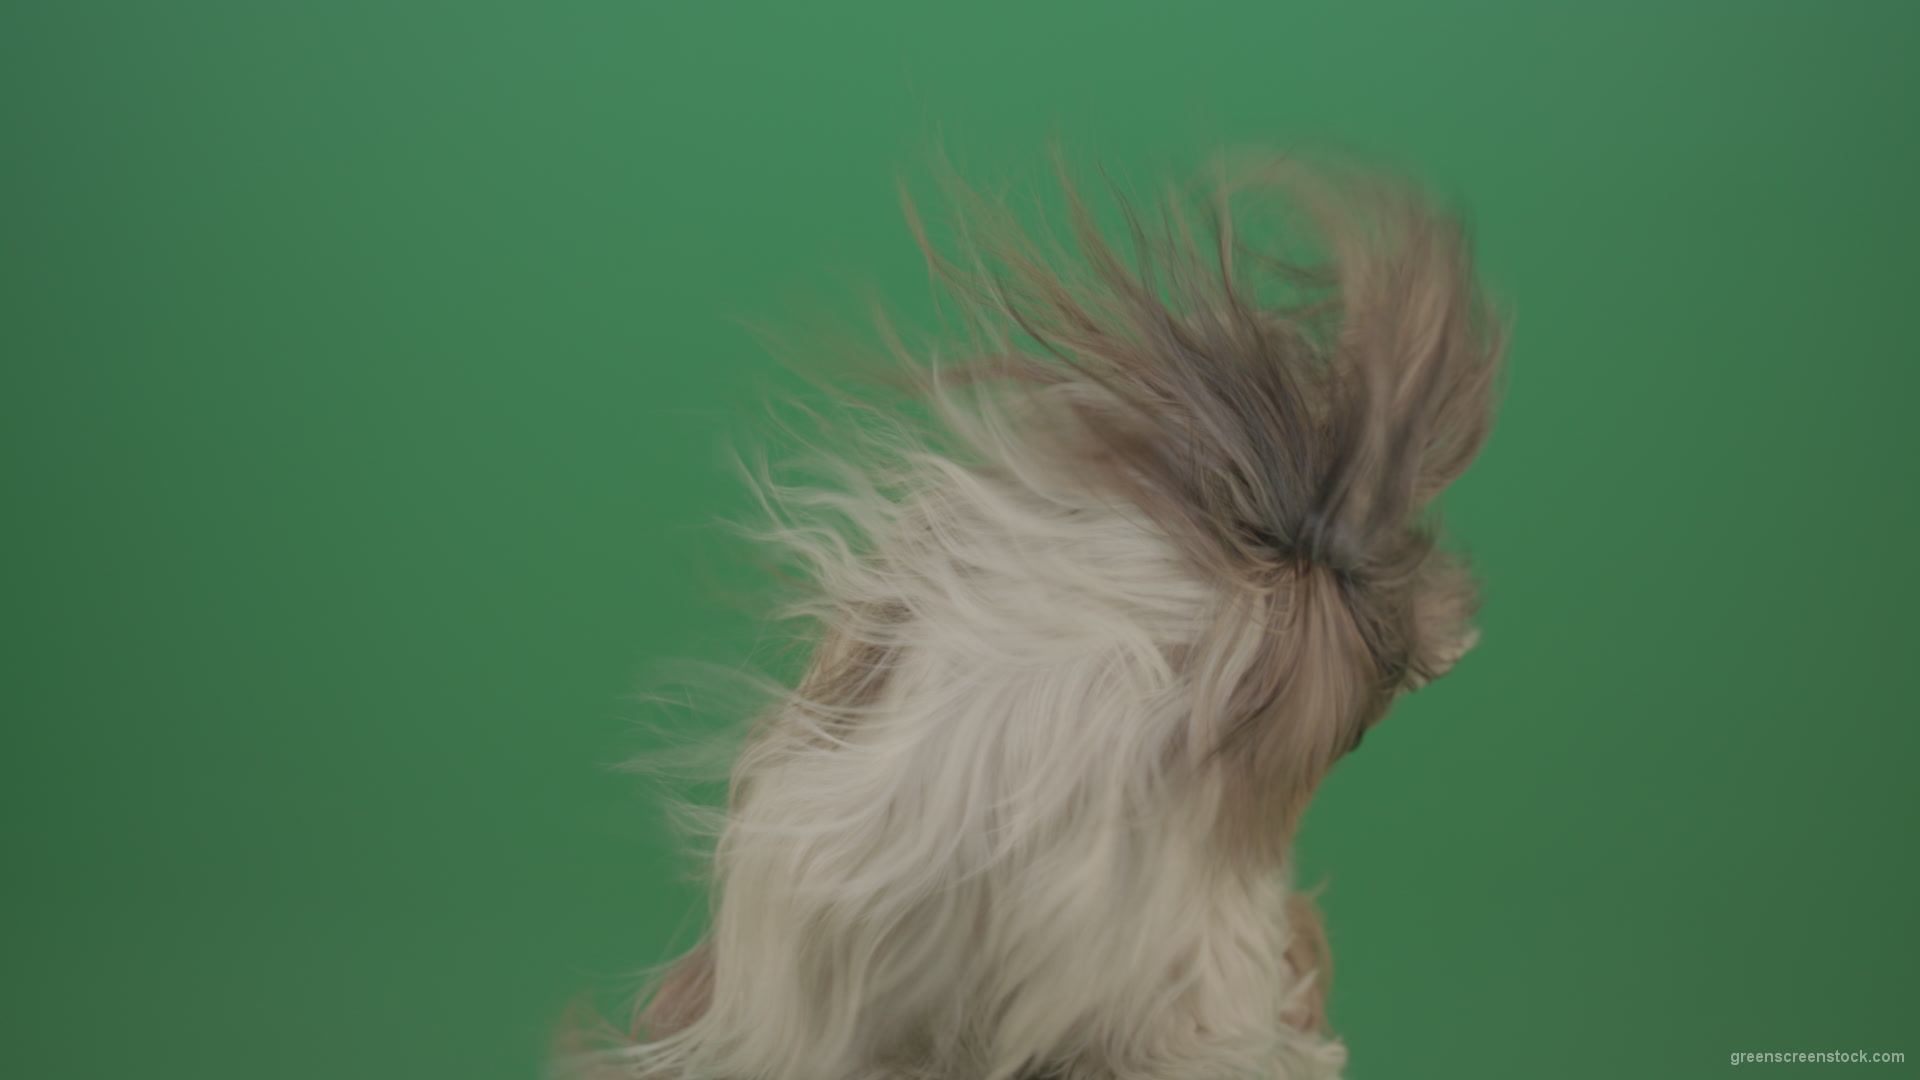 Fashion-long-hair-Shihtzu-dog-in-wind-turbulence-hairstyle-isolated-on-green-screen_006 Green Screen Stock